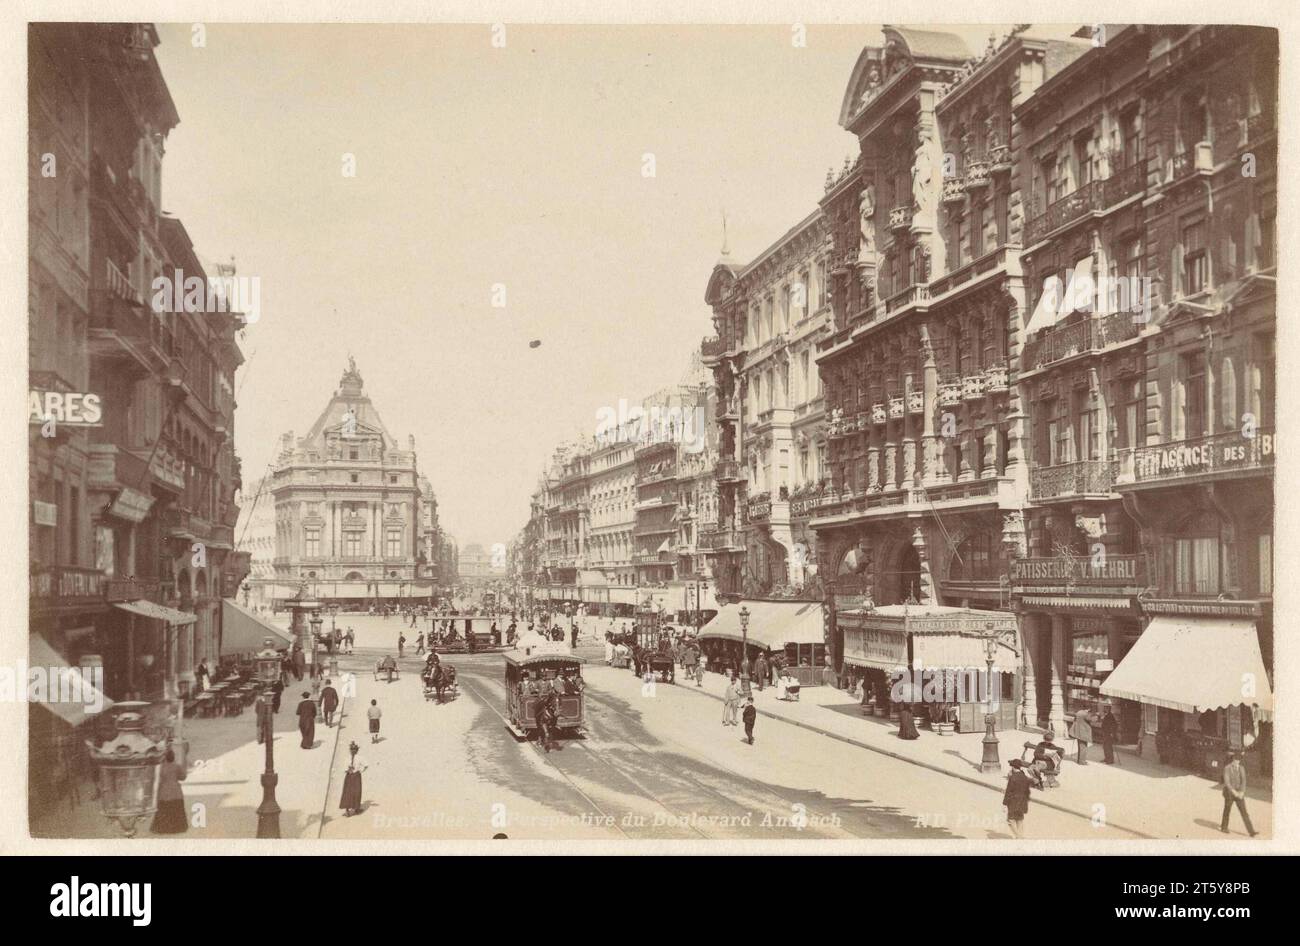 Boulevard Anspach in Brussels, Étienne Neurdein, 1860 - 1900 Stock Photo